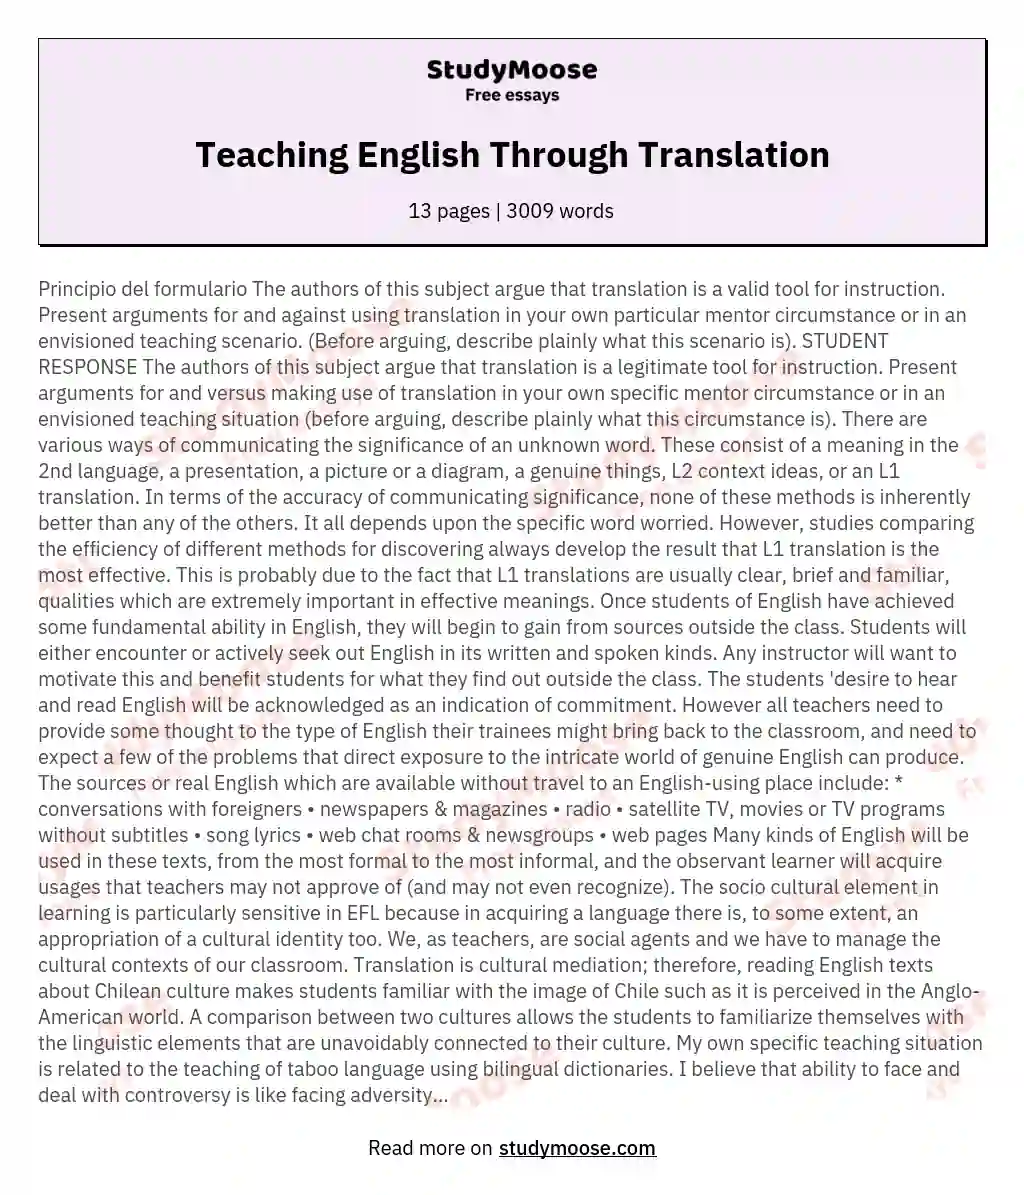 Teaching English Through Translation essay